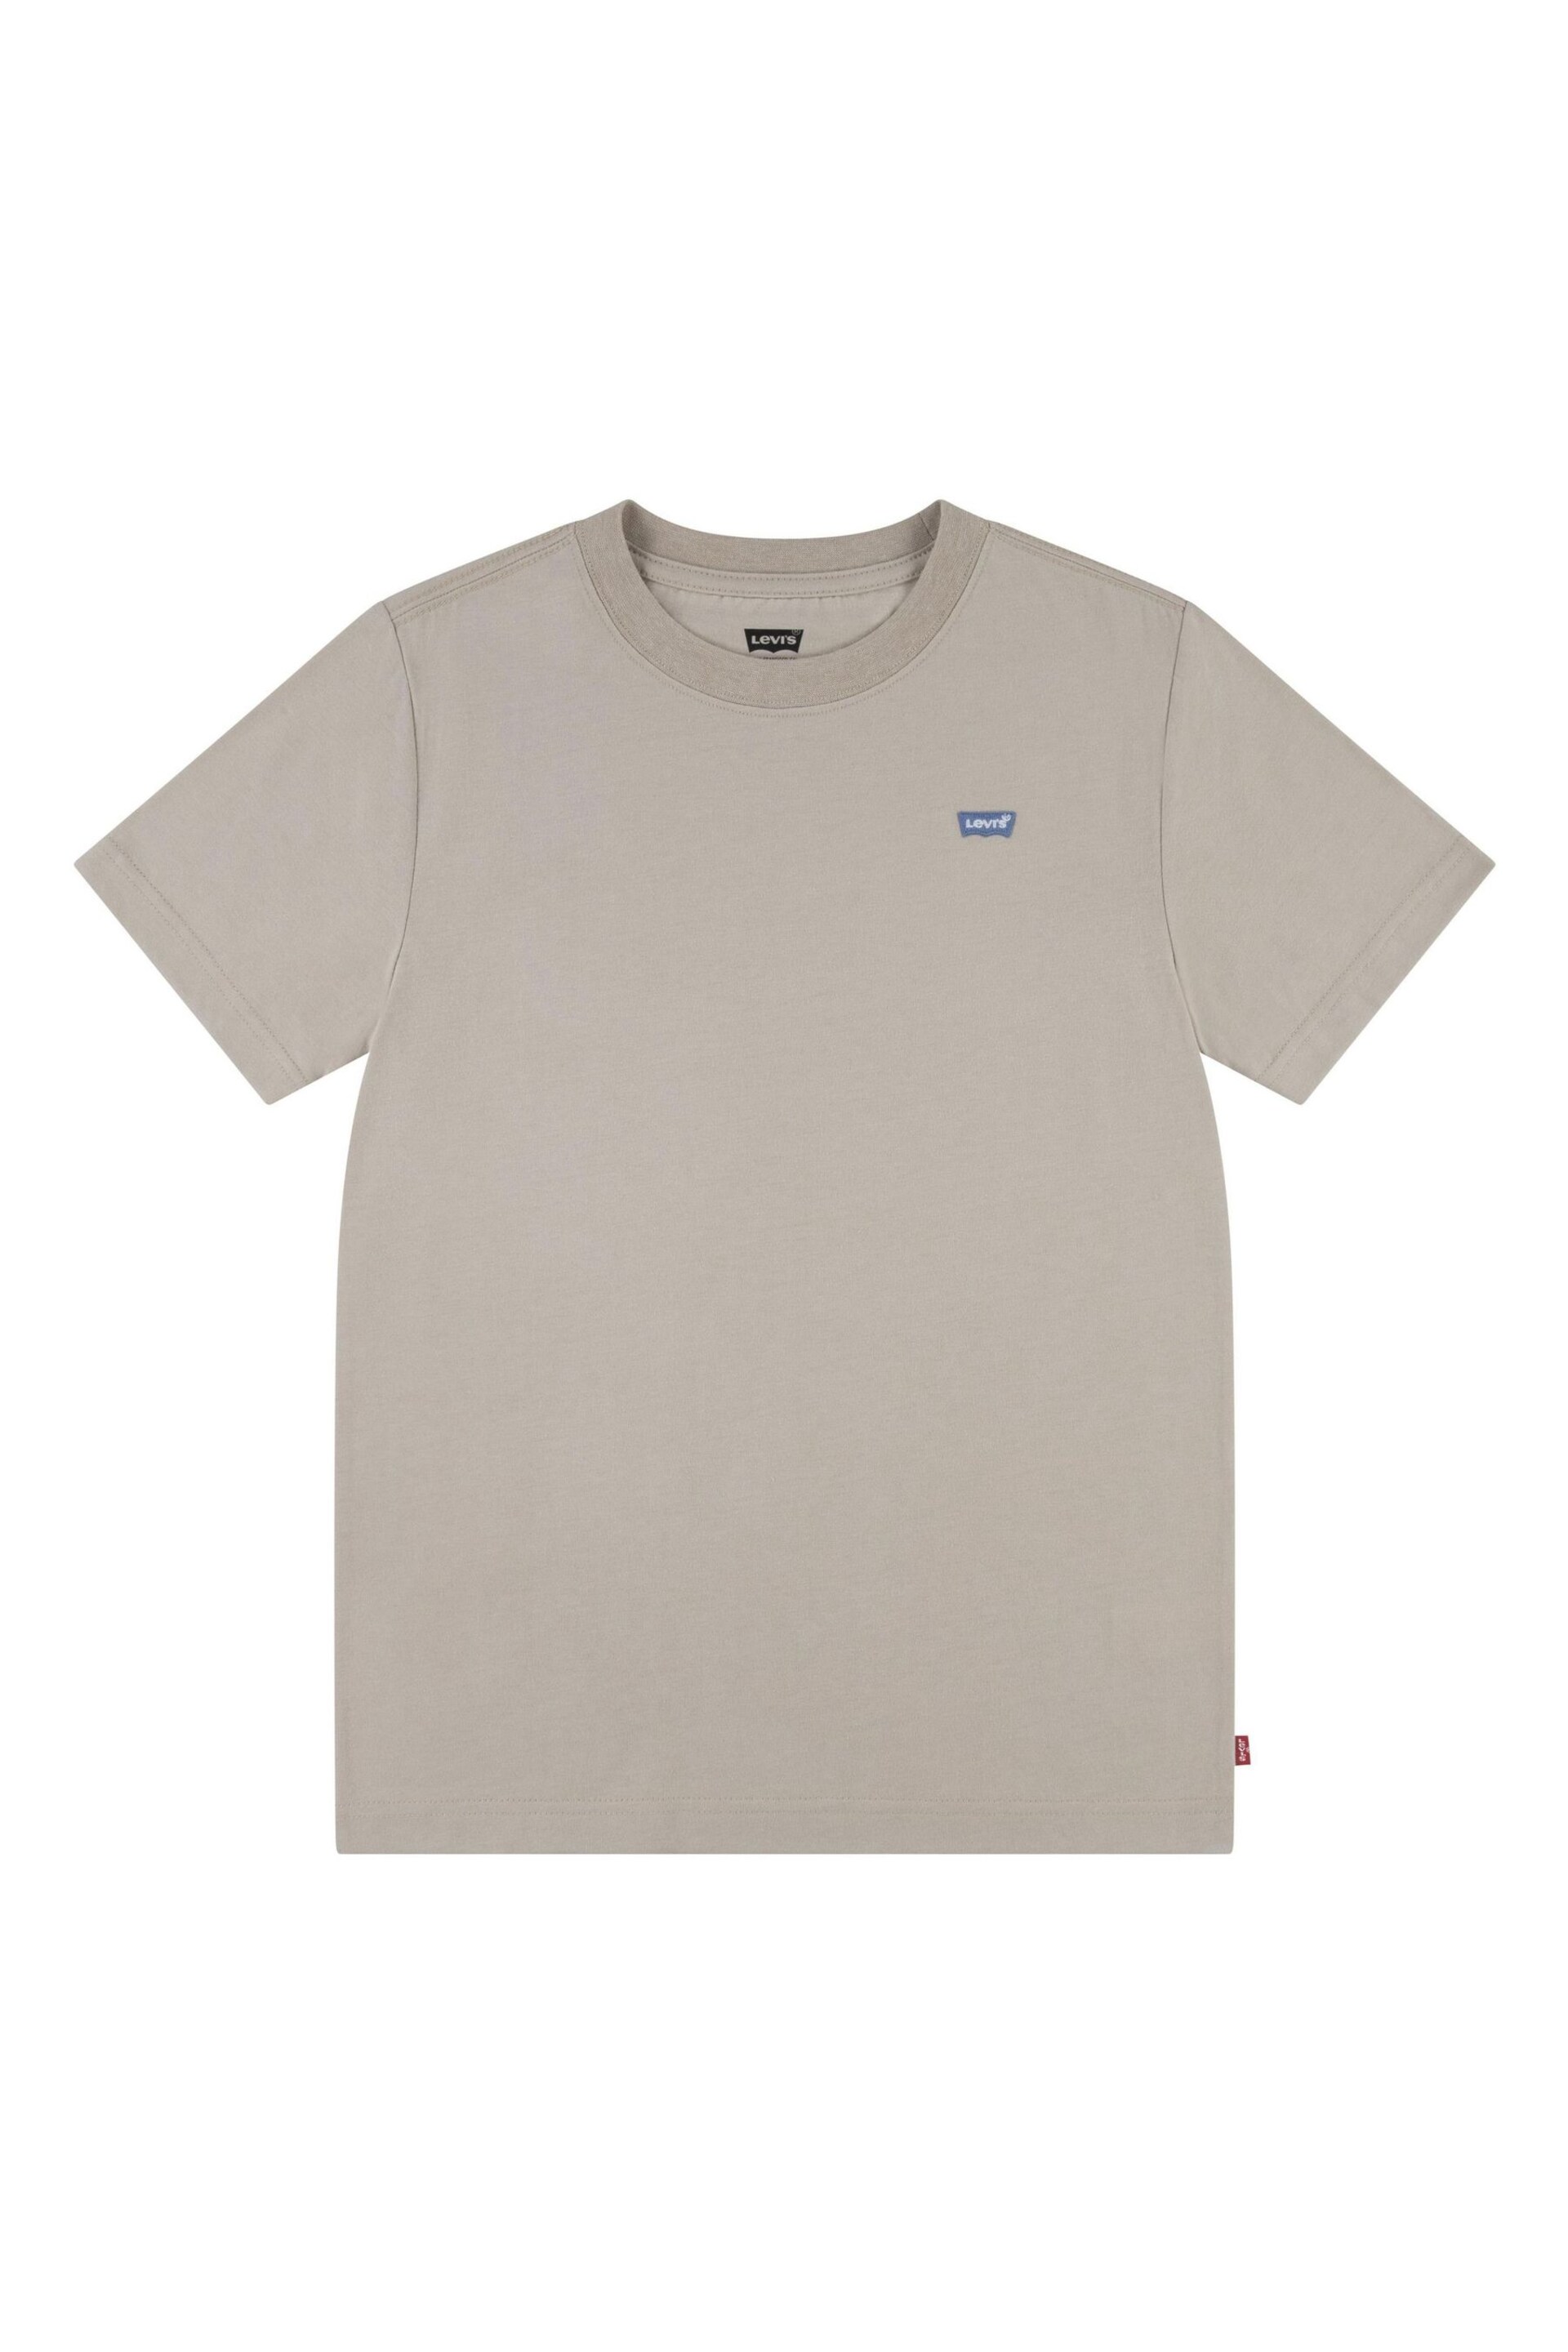 Levi's® Brown Short Sleeve Original Housemark Logo T-Shirt - Image 4 of 7